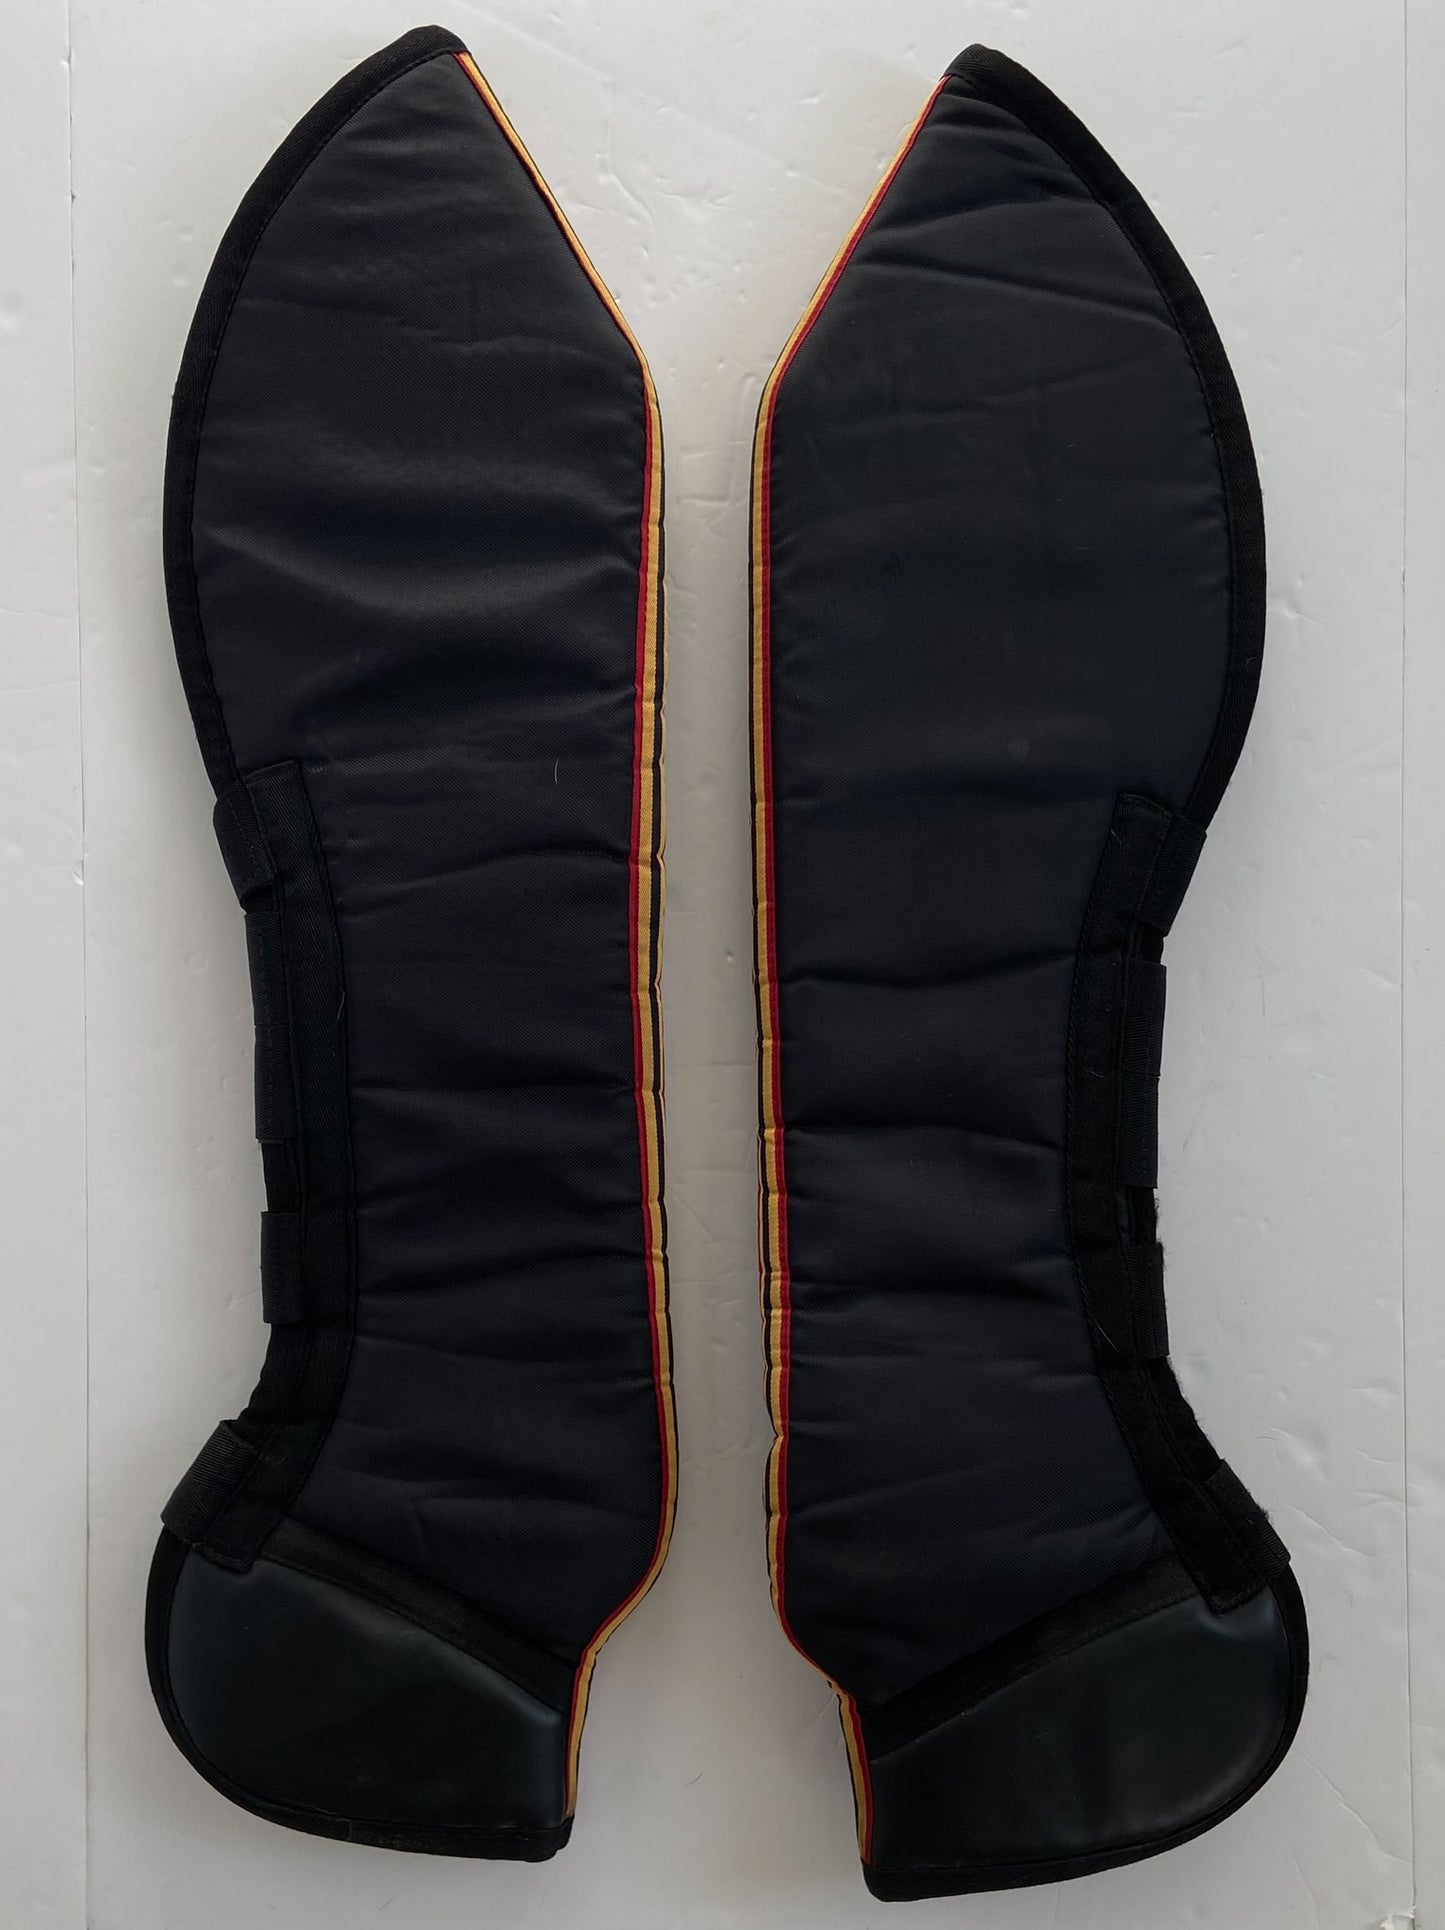 Horseware Ireland Rambo Shipping Boots - Black - Full Size